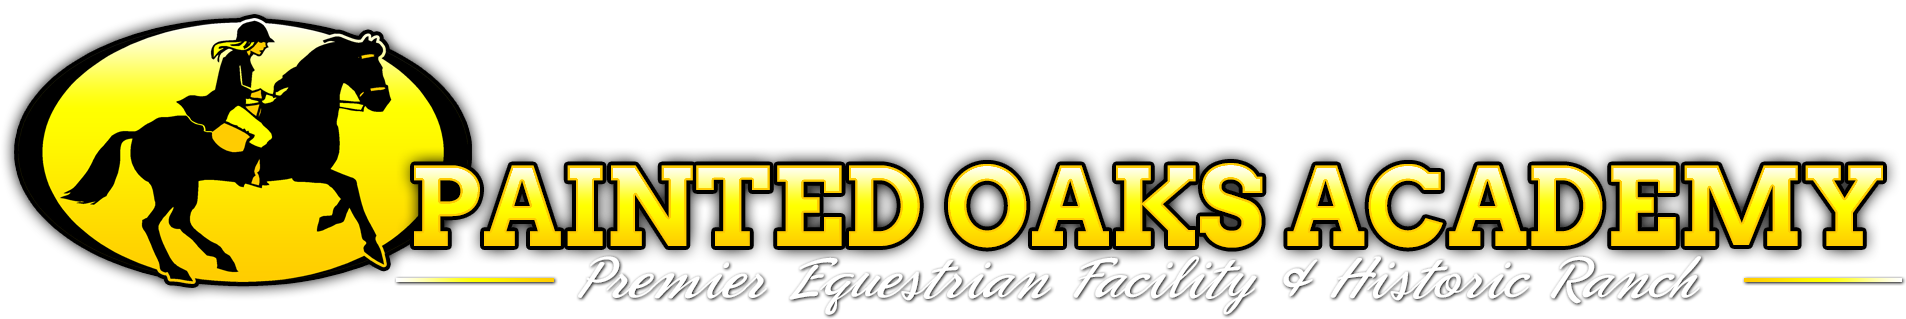 Painted Oaks Adademy Logo